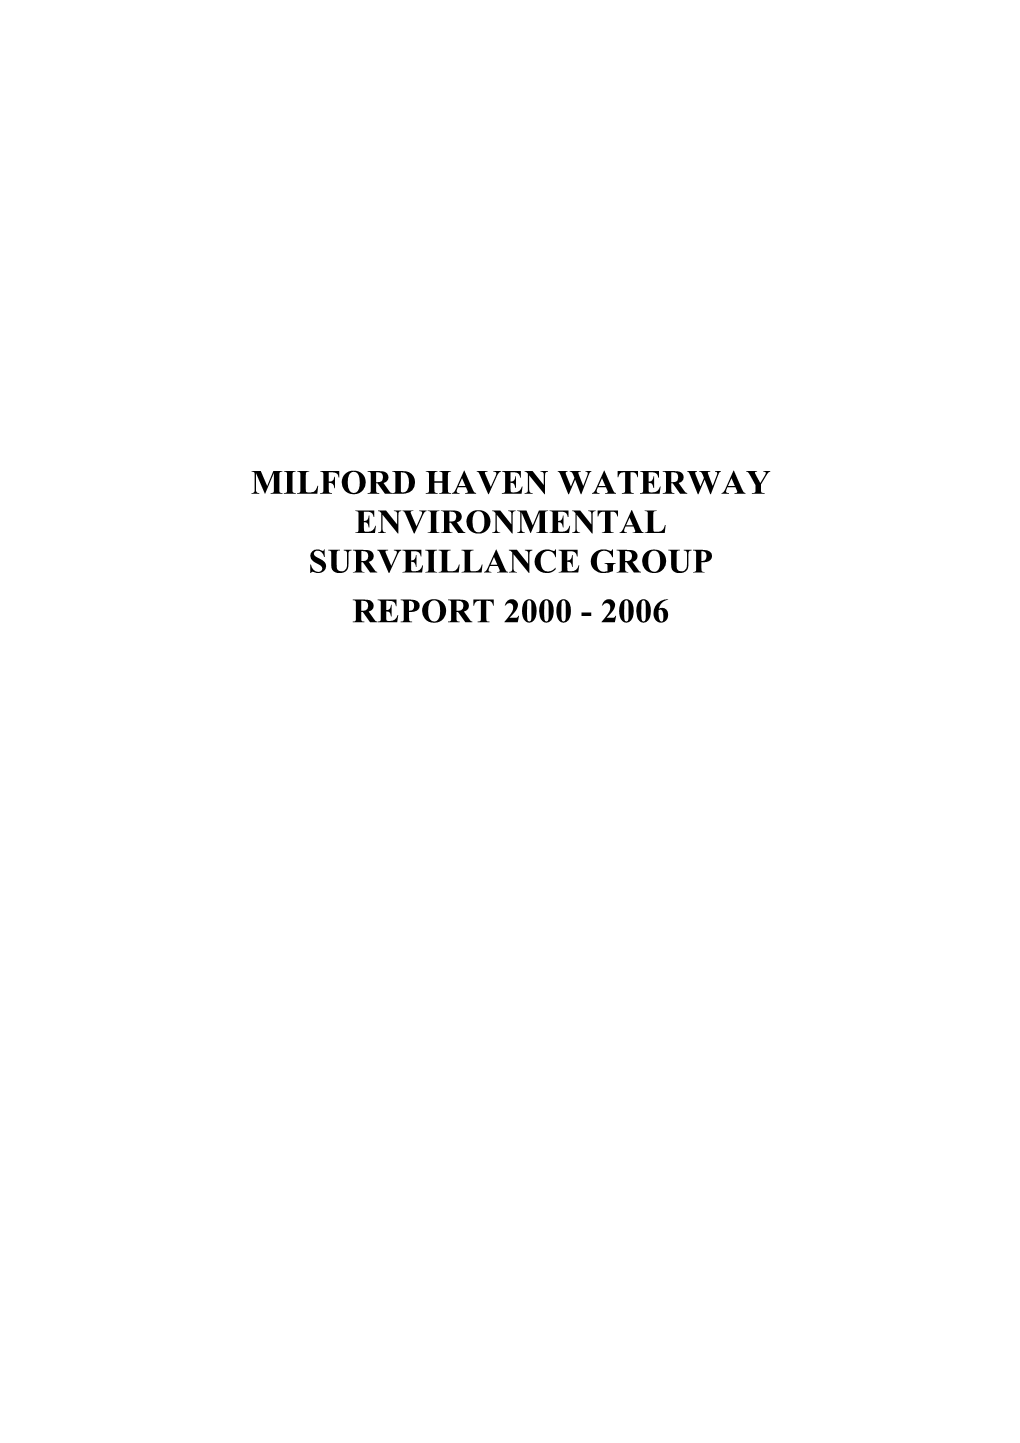 A Review of Environmental Studies in Milford Haven Waterway 1992 – 2000